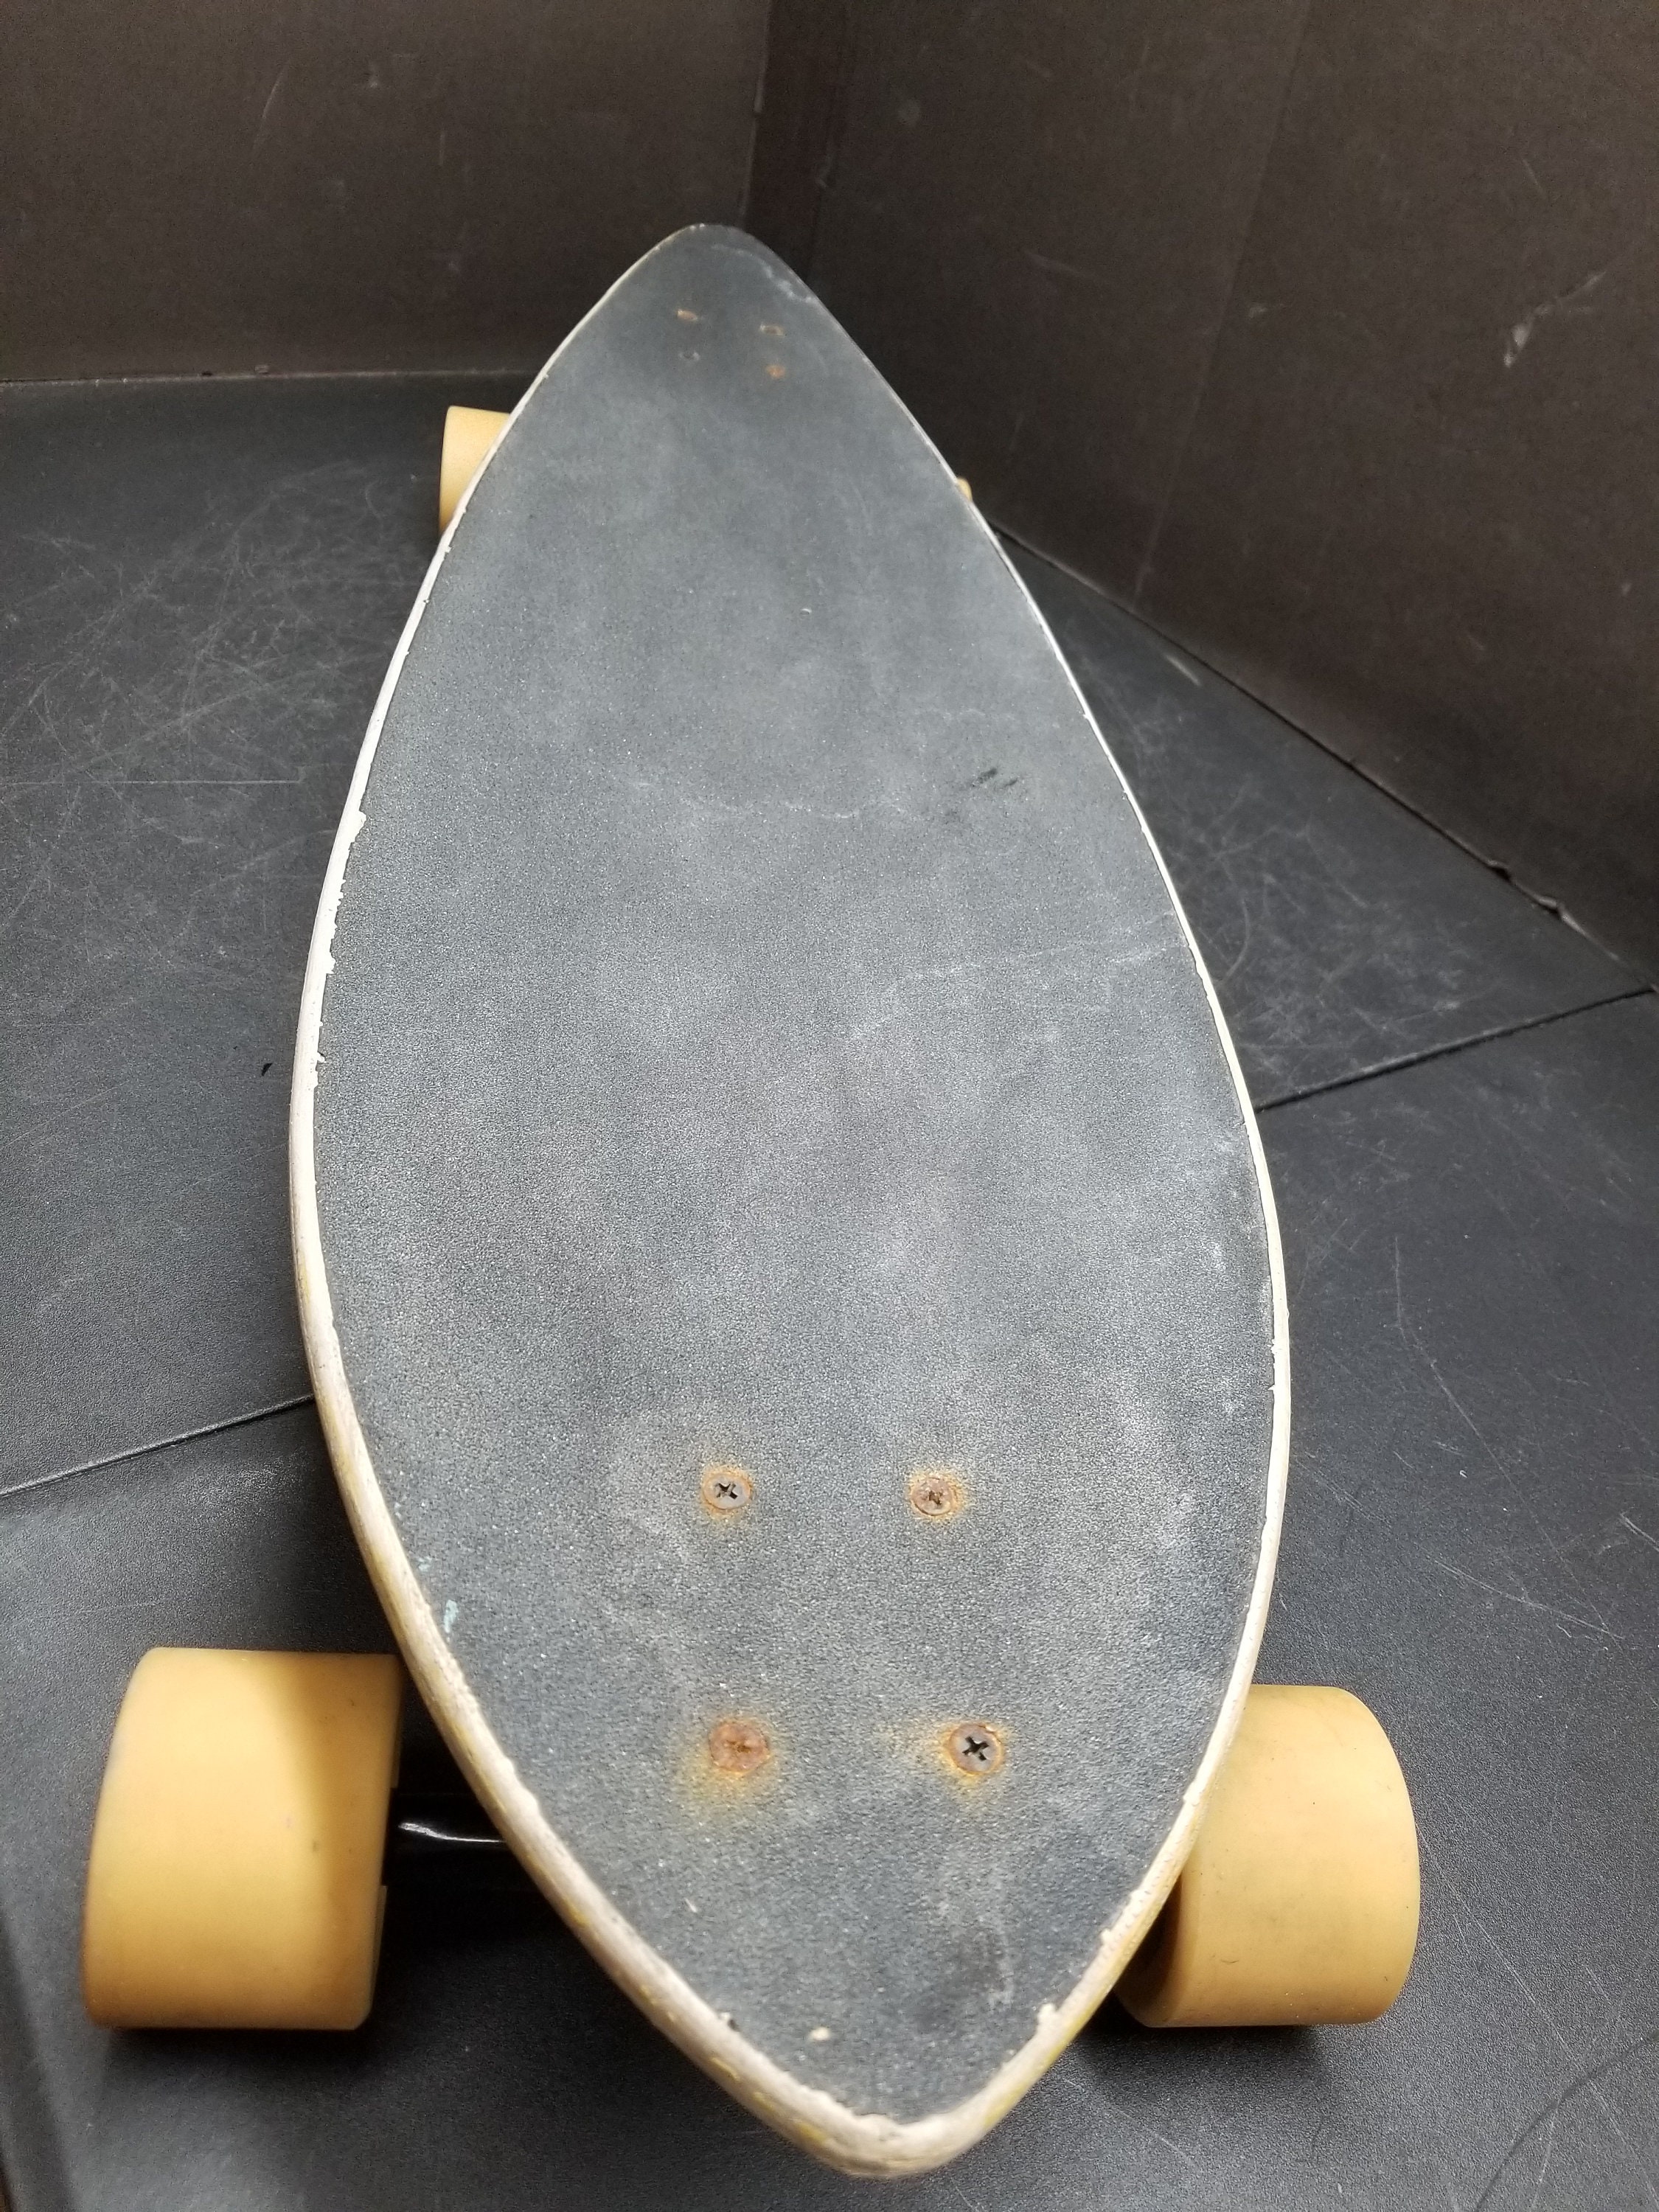 s s Skateboard   Etsy